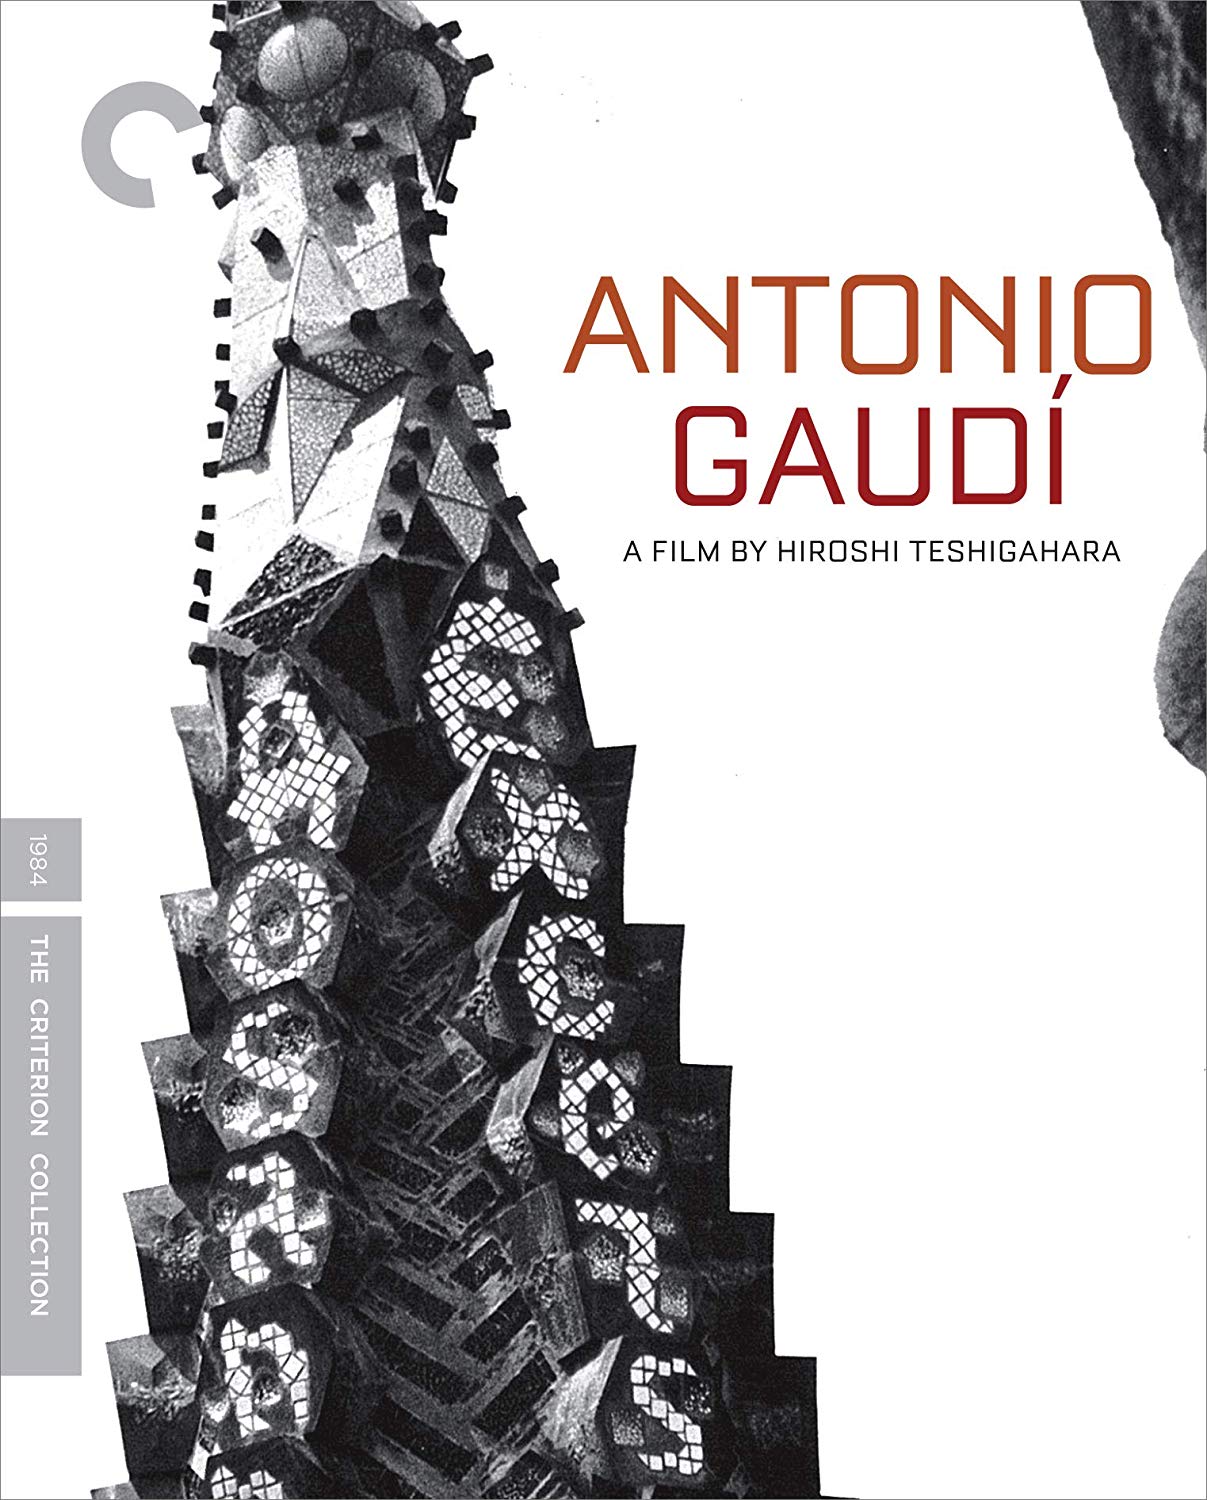 Antonio Gaudi [Criterion Collection] [Blu-ray] cover art